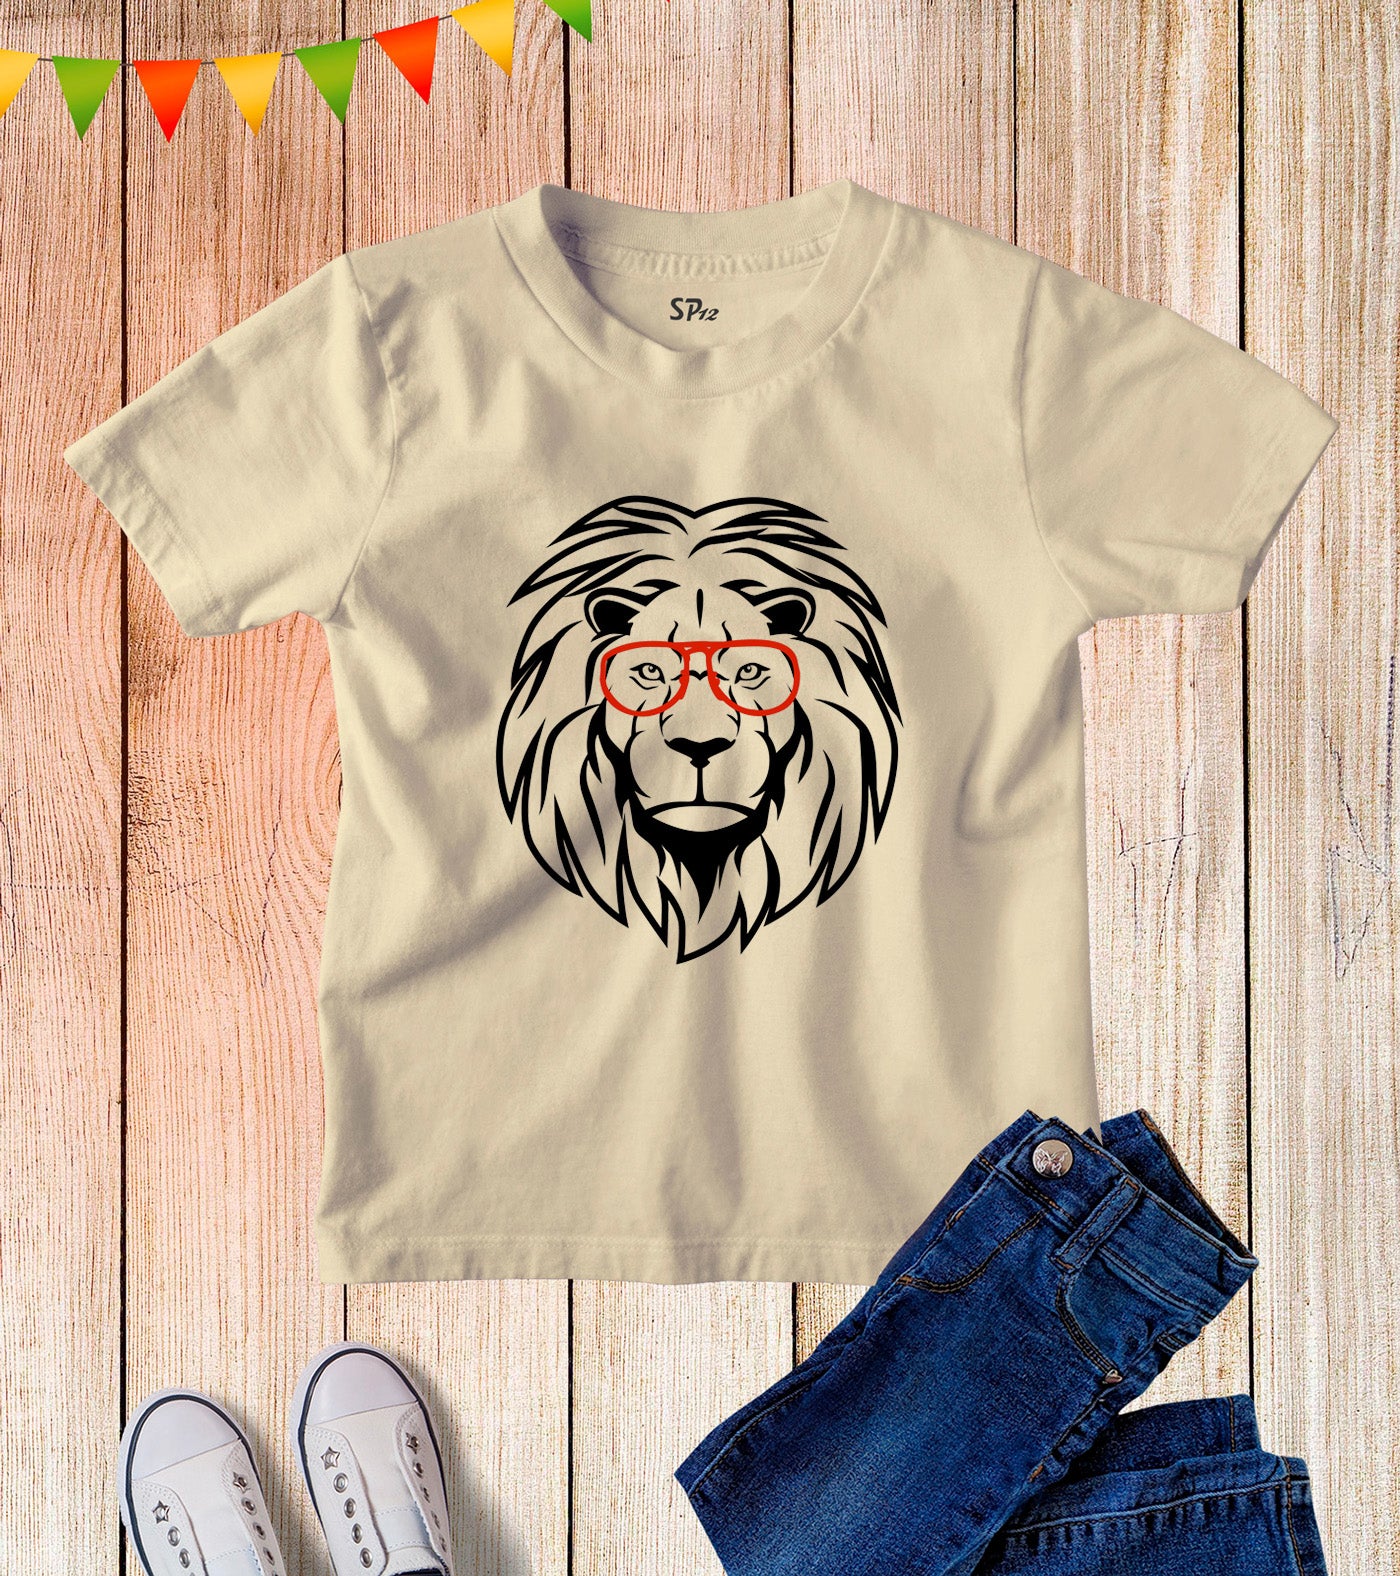 Fun Kie Lion Funny Graphic Kids T Shirt